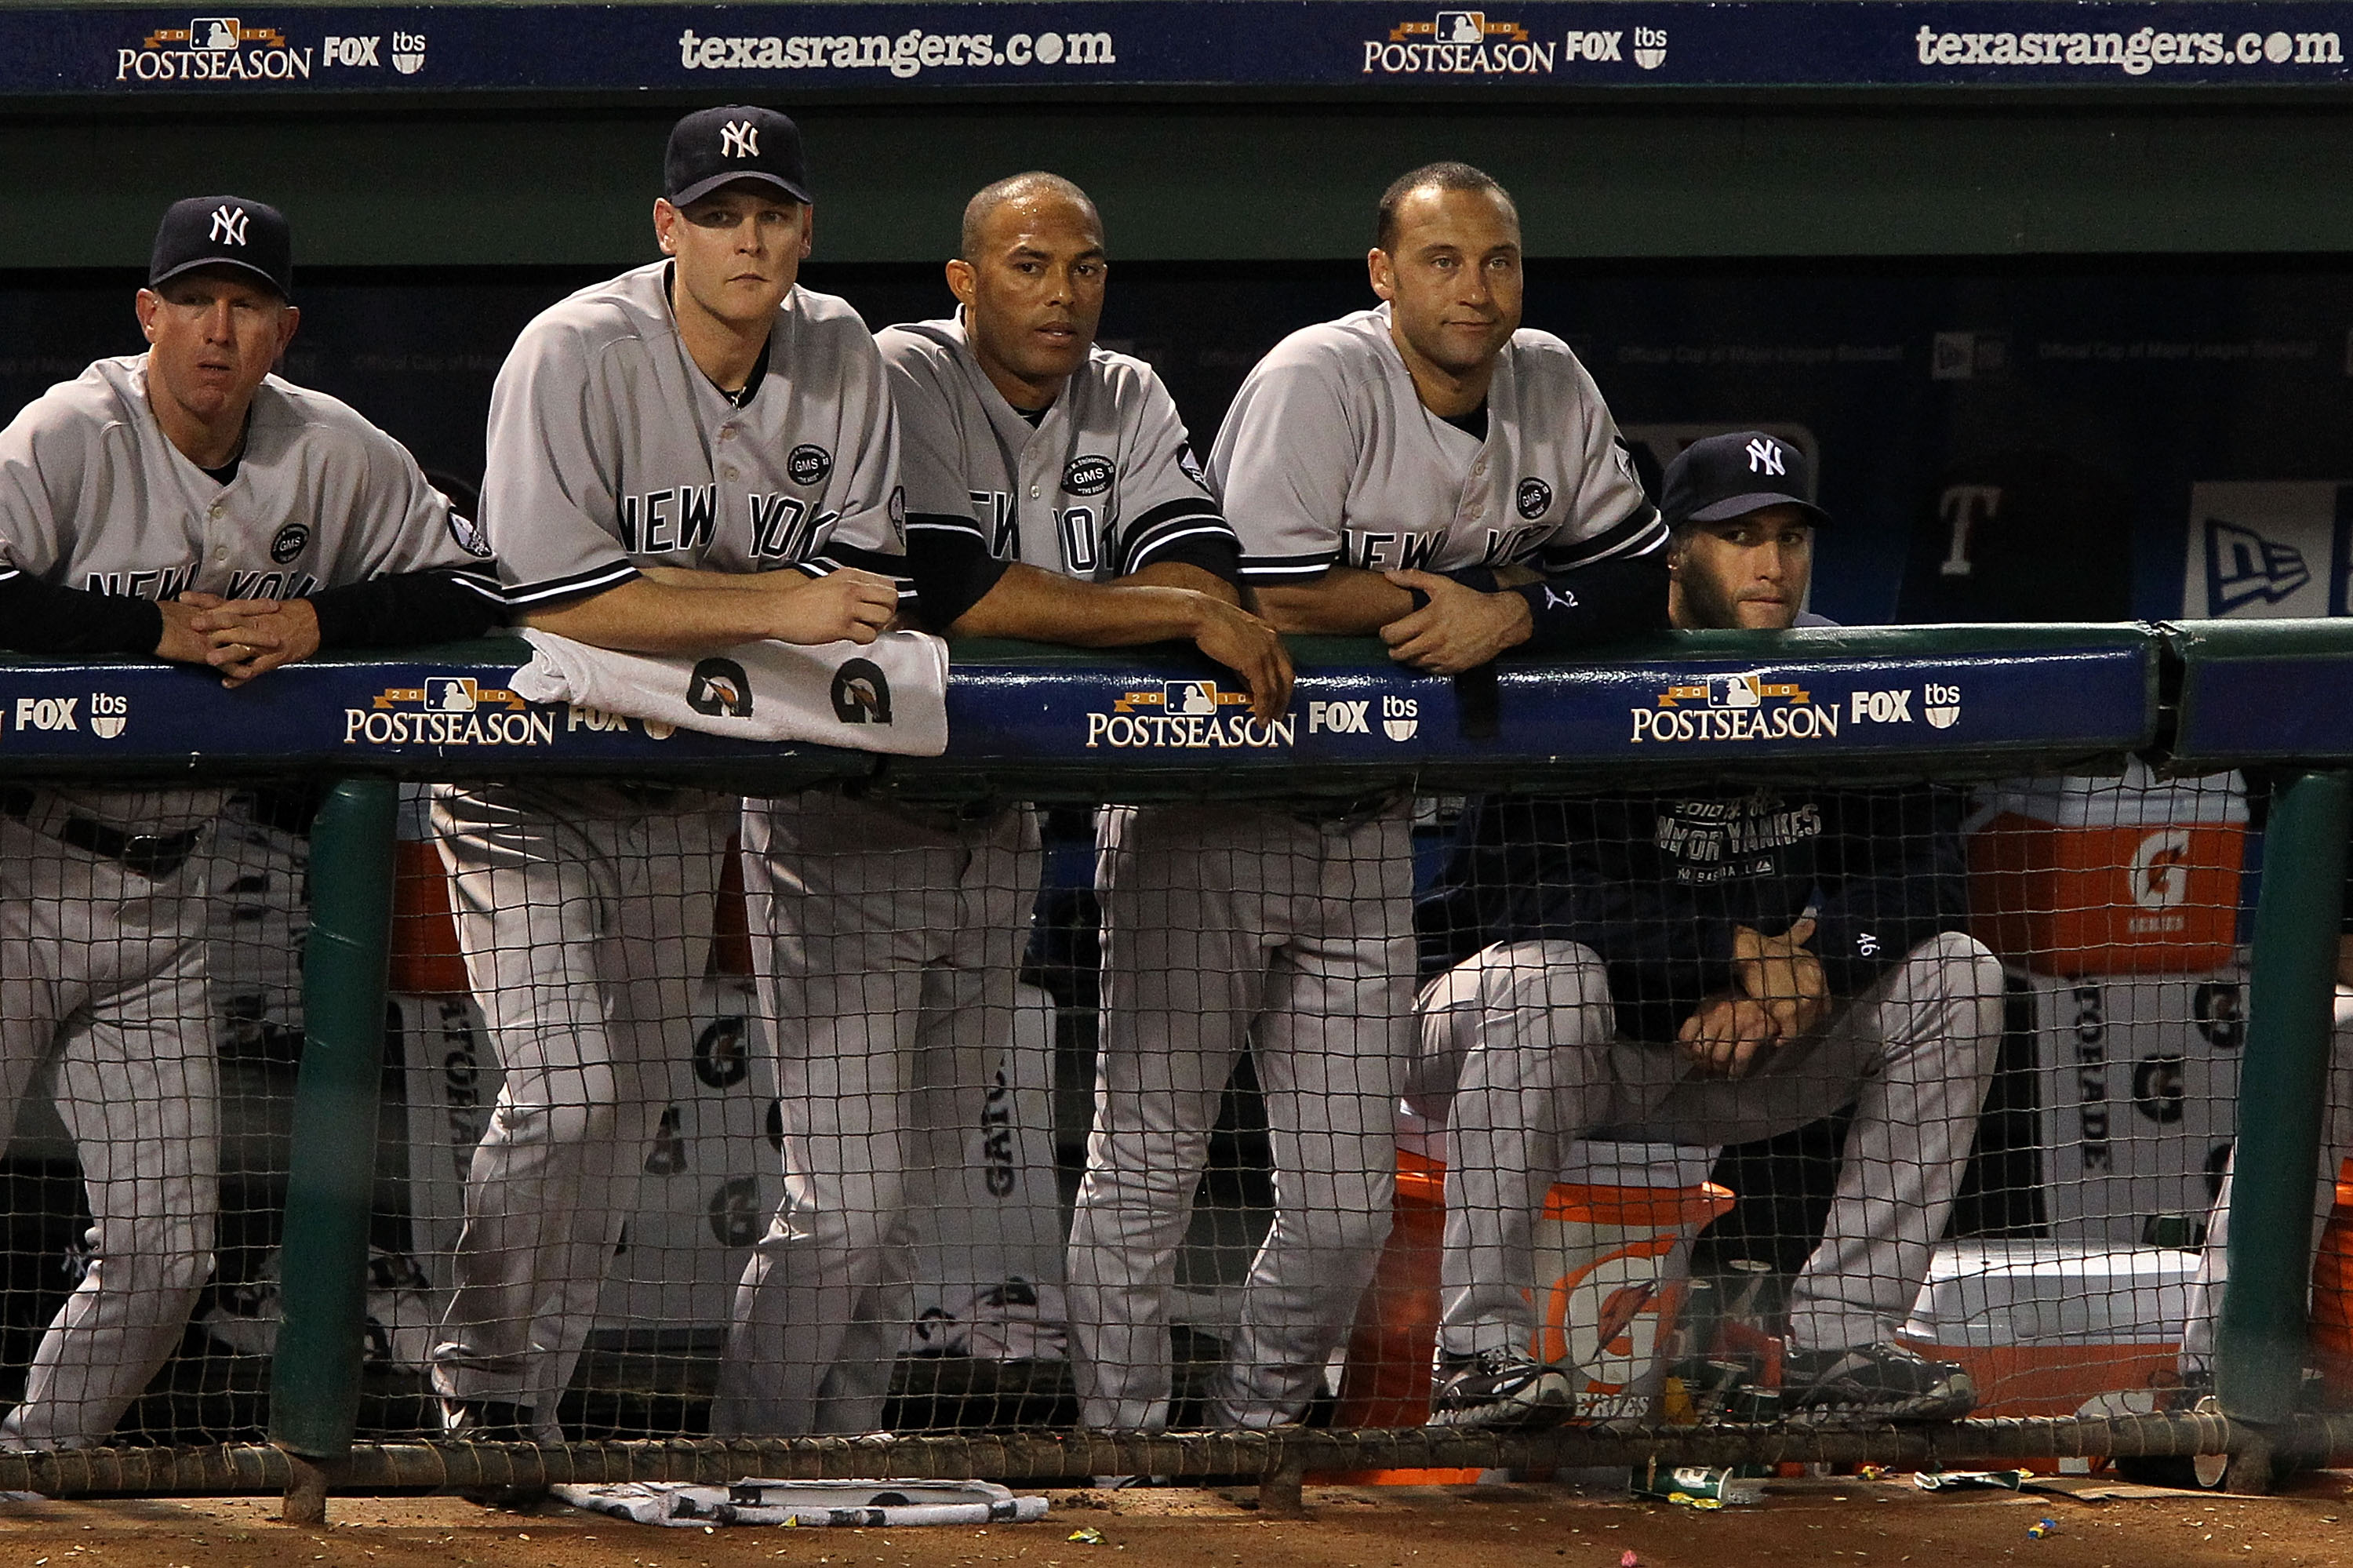 The New York Yankees Core Four! Derek Jeter, Mariano Rivera, Andy